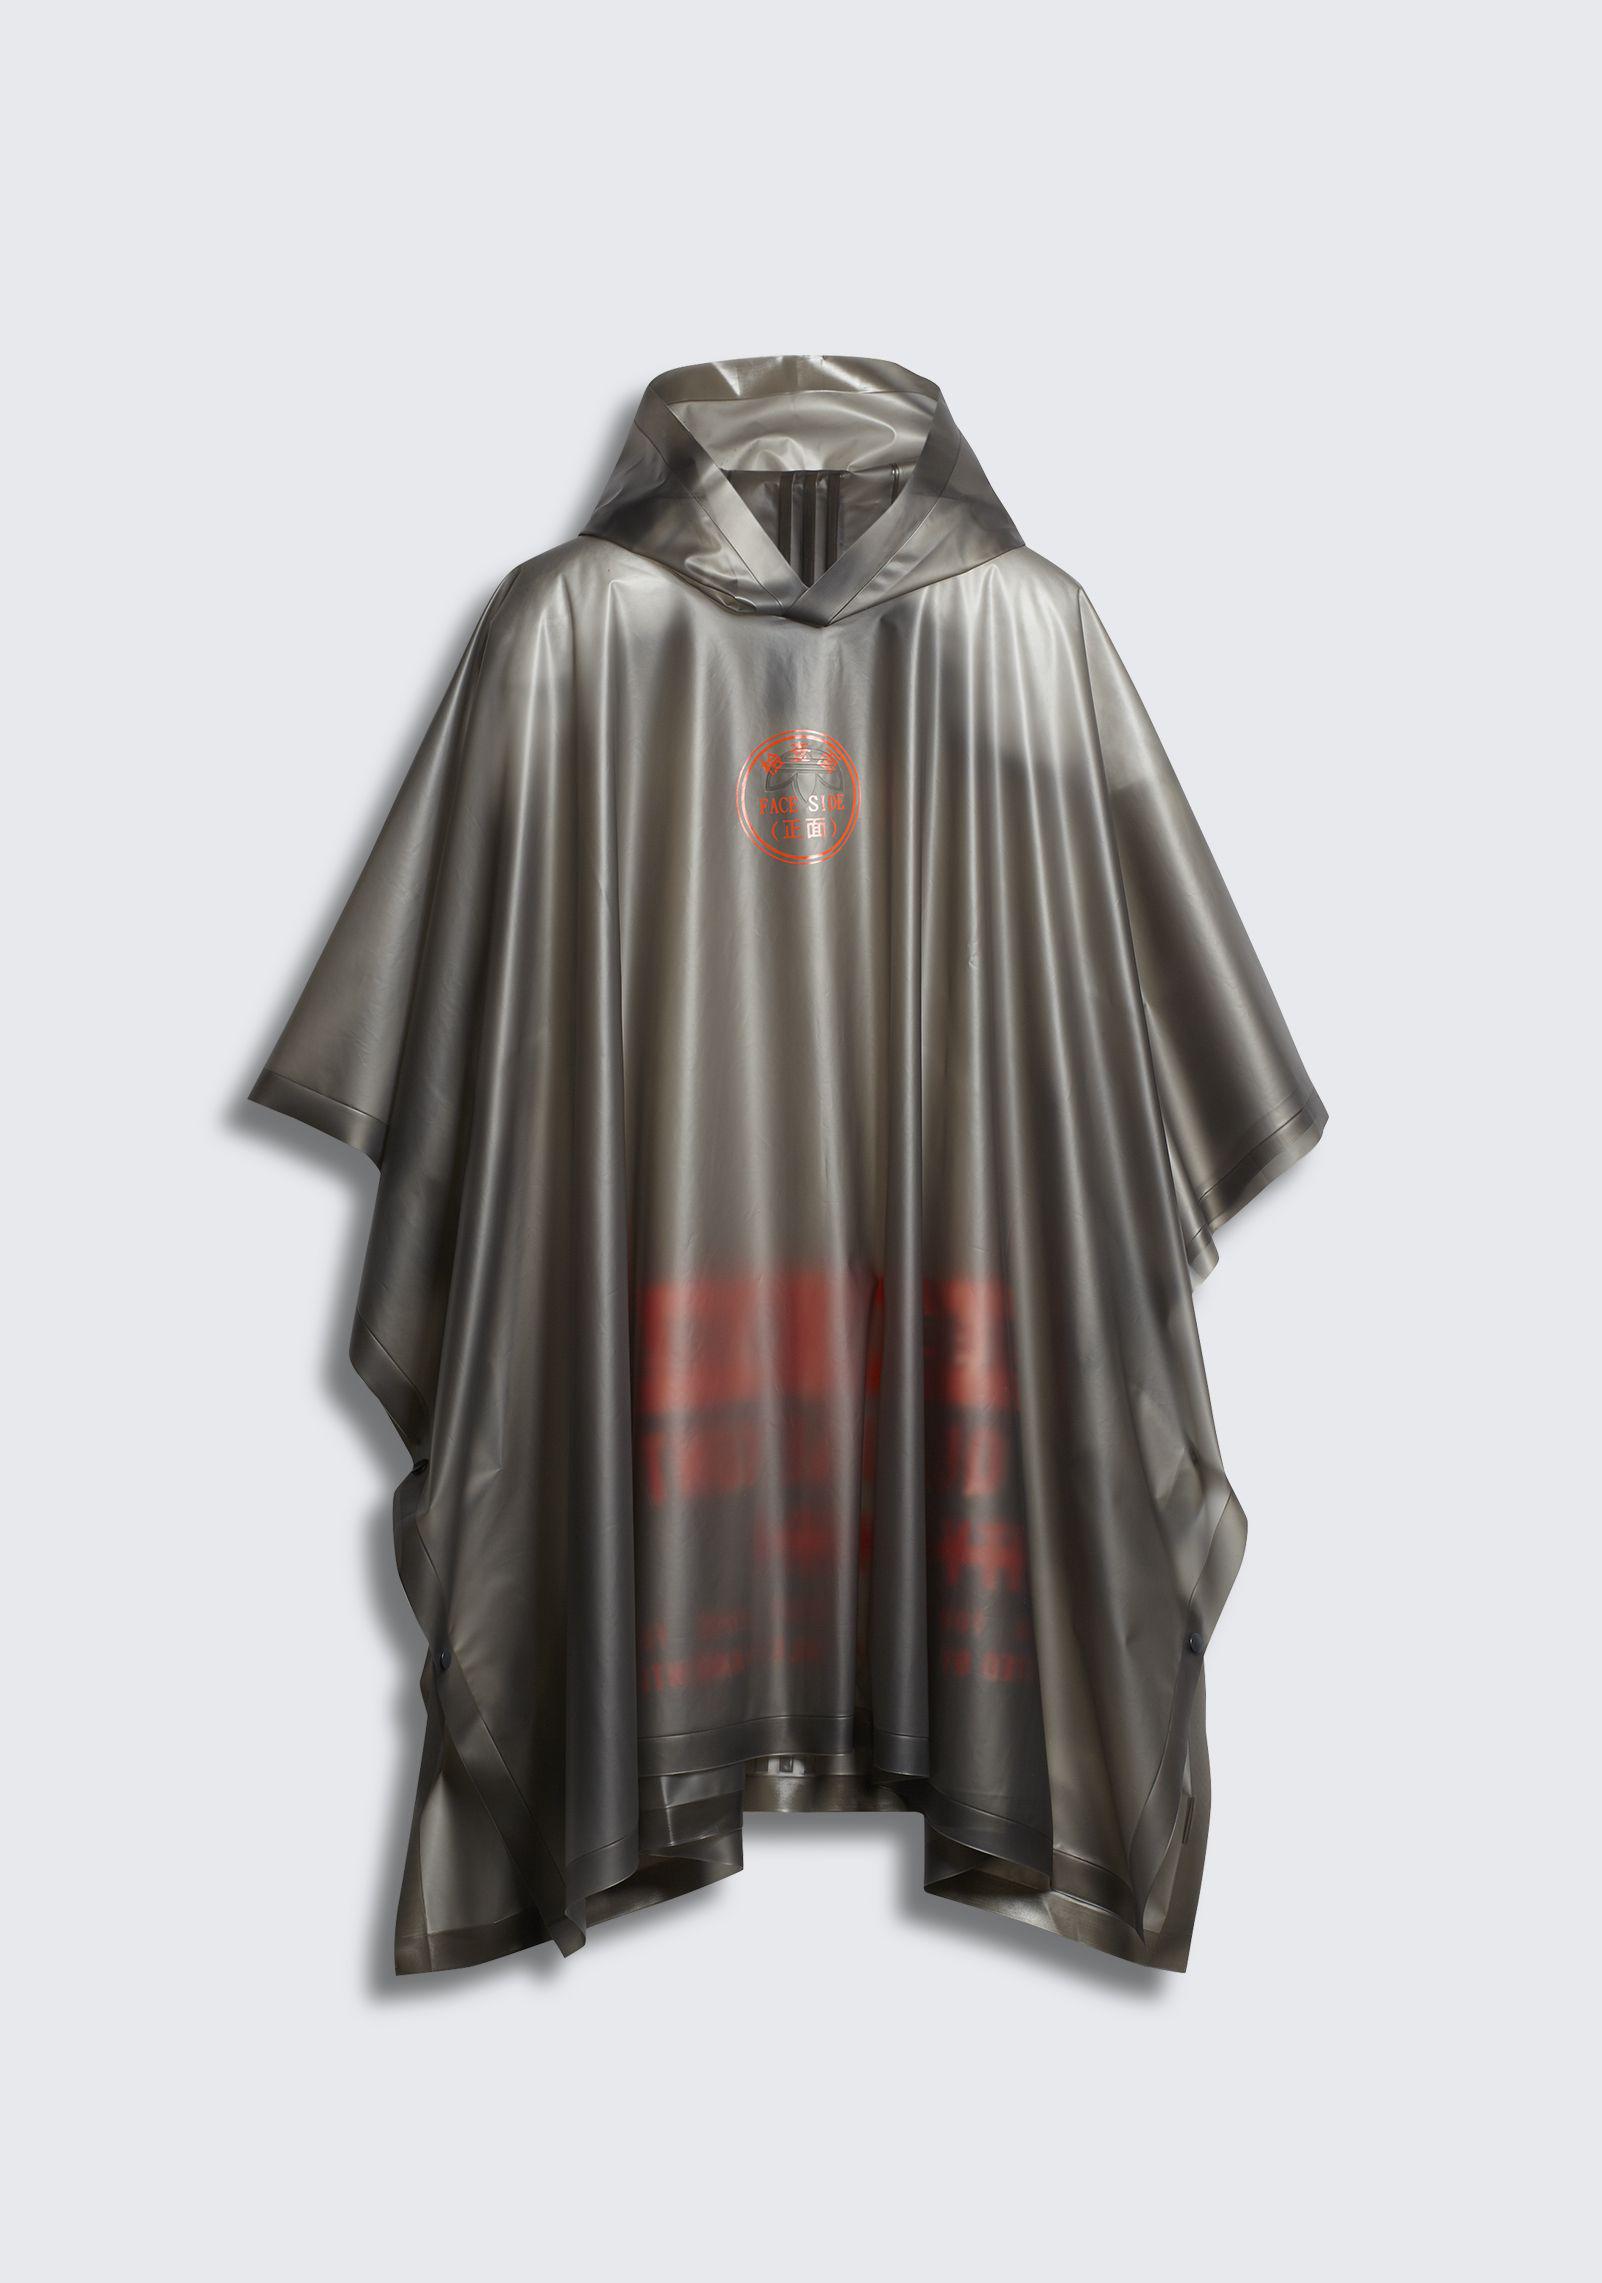 Alexander Wang Adidas Originals By Aw Poncho in Grey (Gray) - Lyst